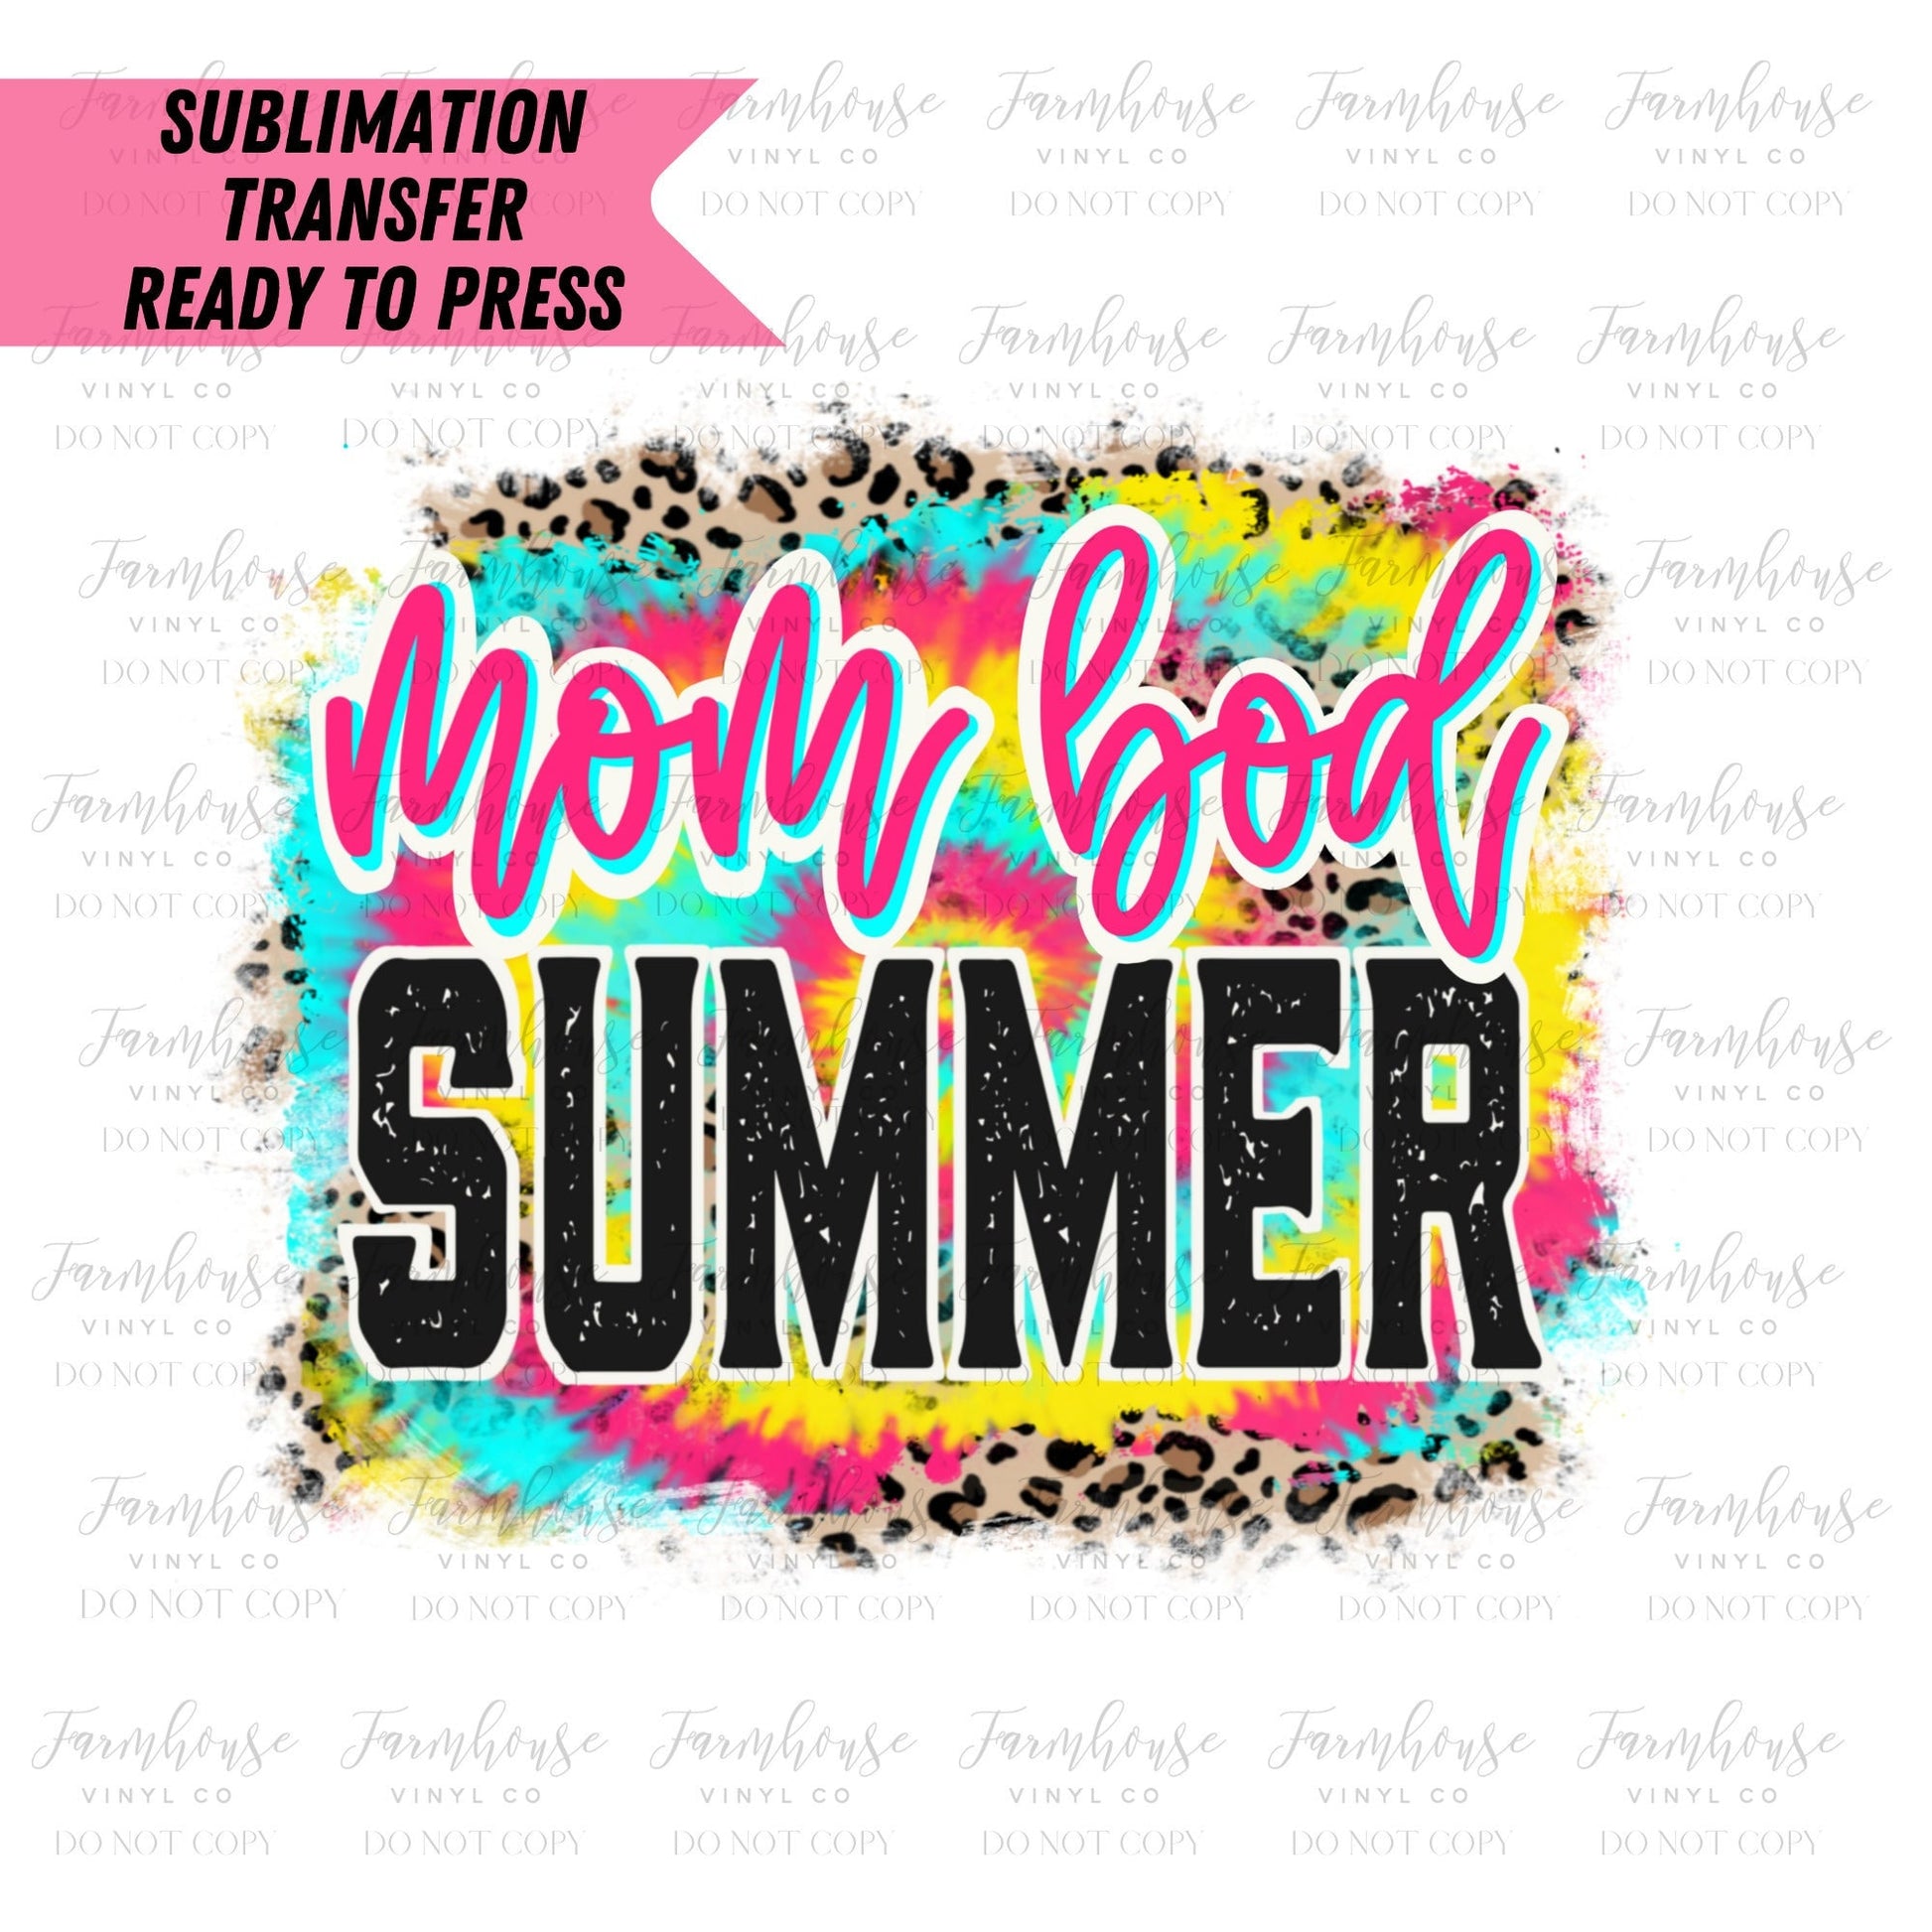 Neon Tie Dye Mom Bod Summer Ready to Press Sublimation Transfer - Farmhouse Vinyl Co